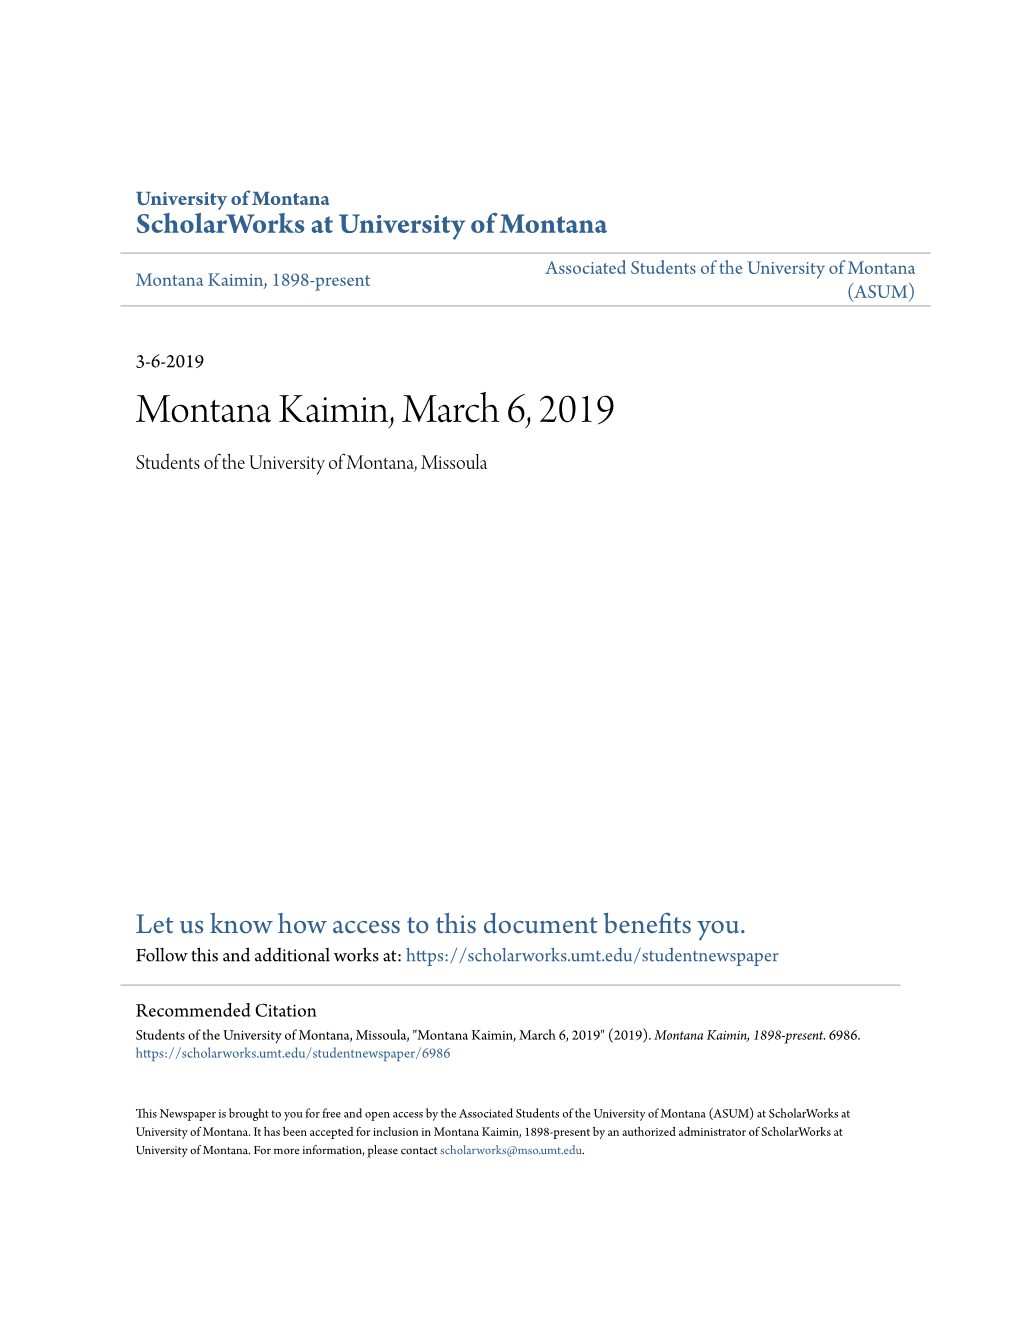 Montana Kaimin, March 6, 2019 Students of the University of Montana, Missoula